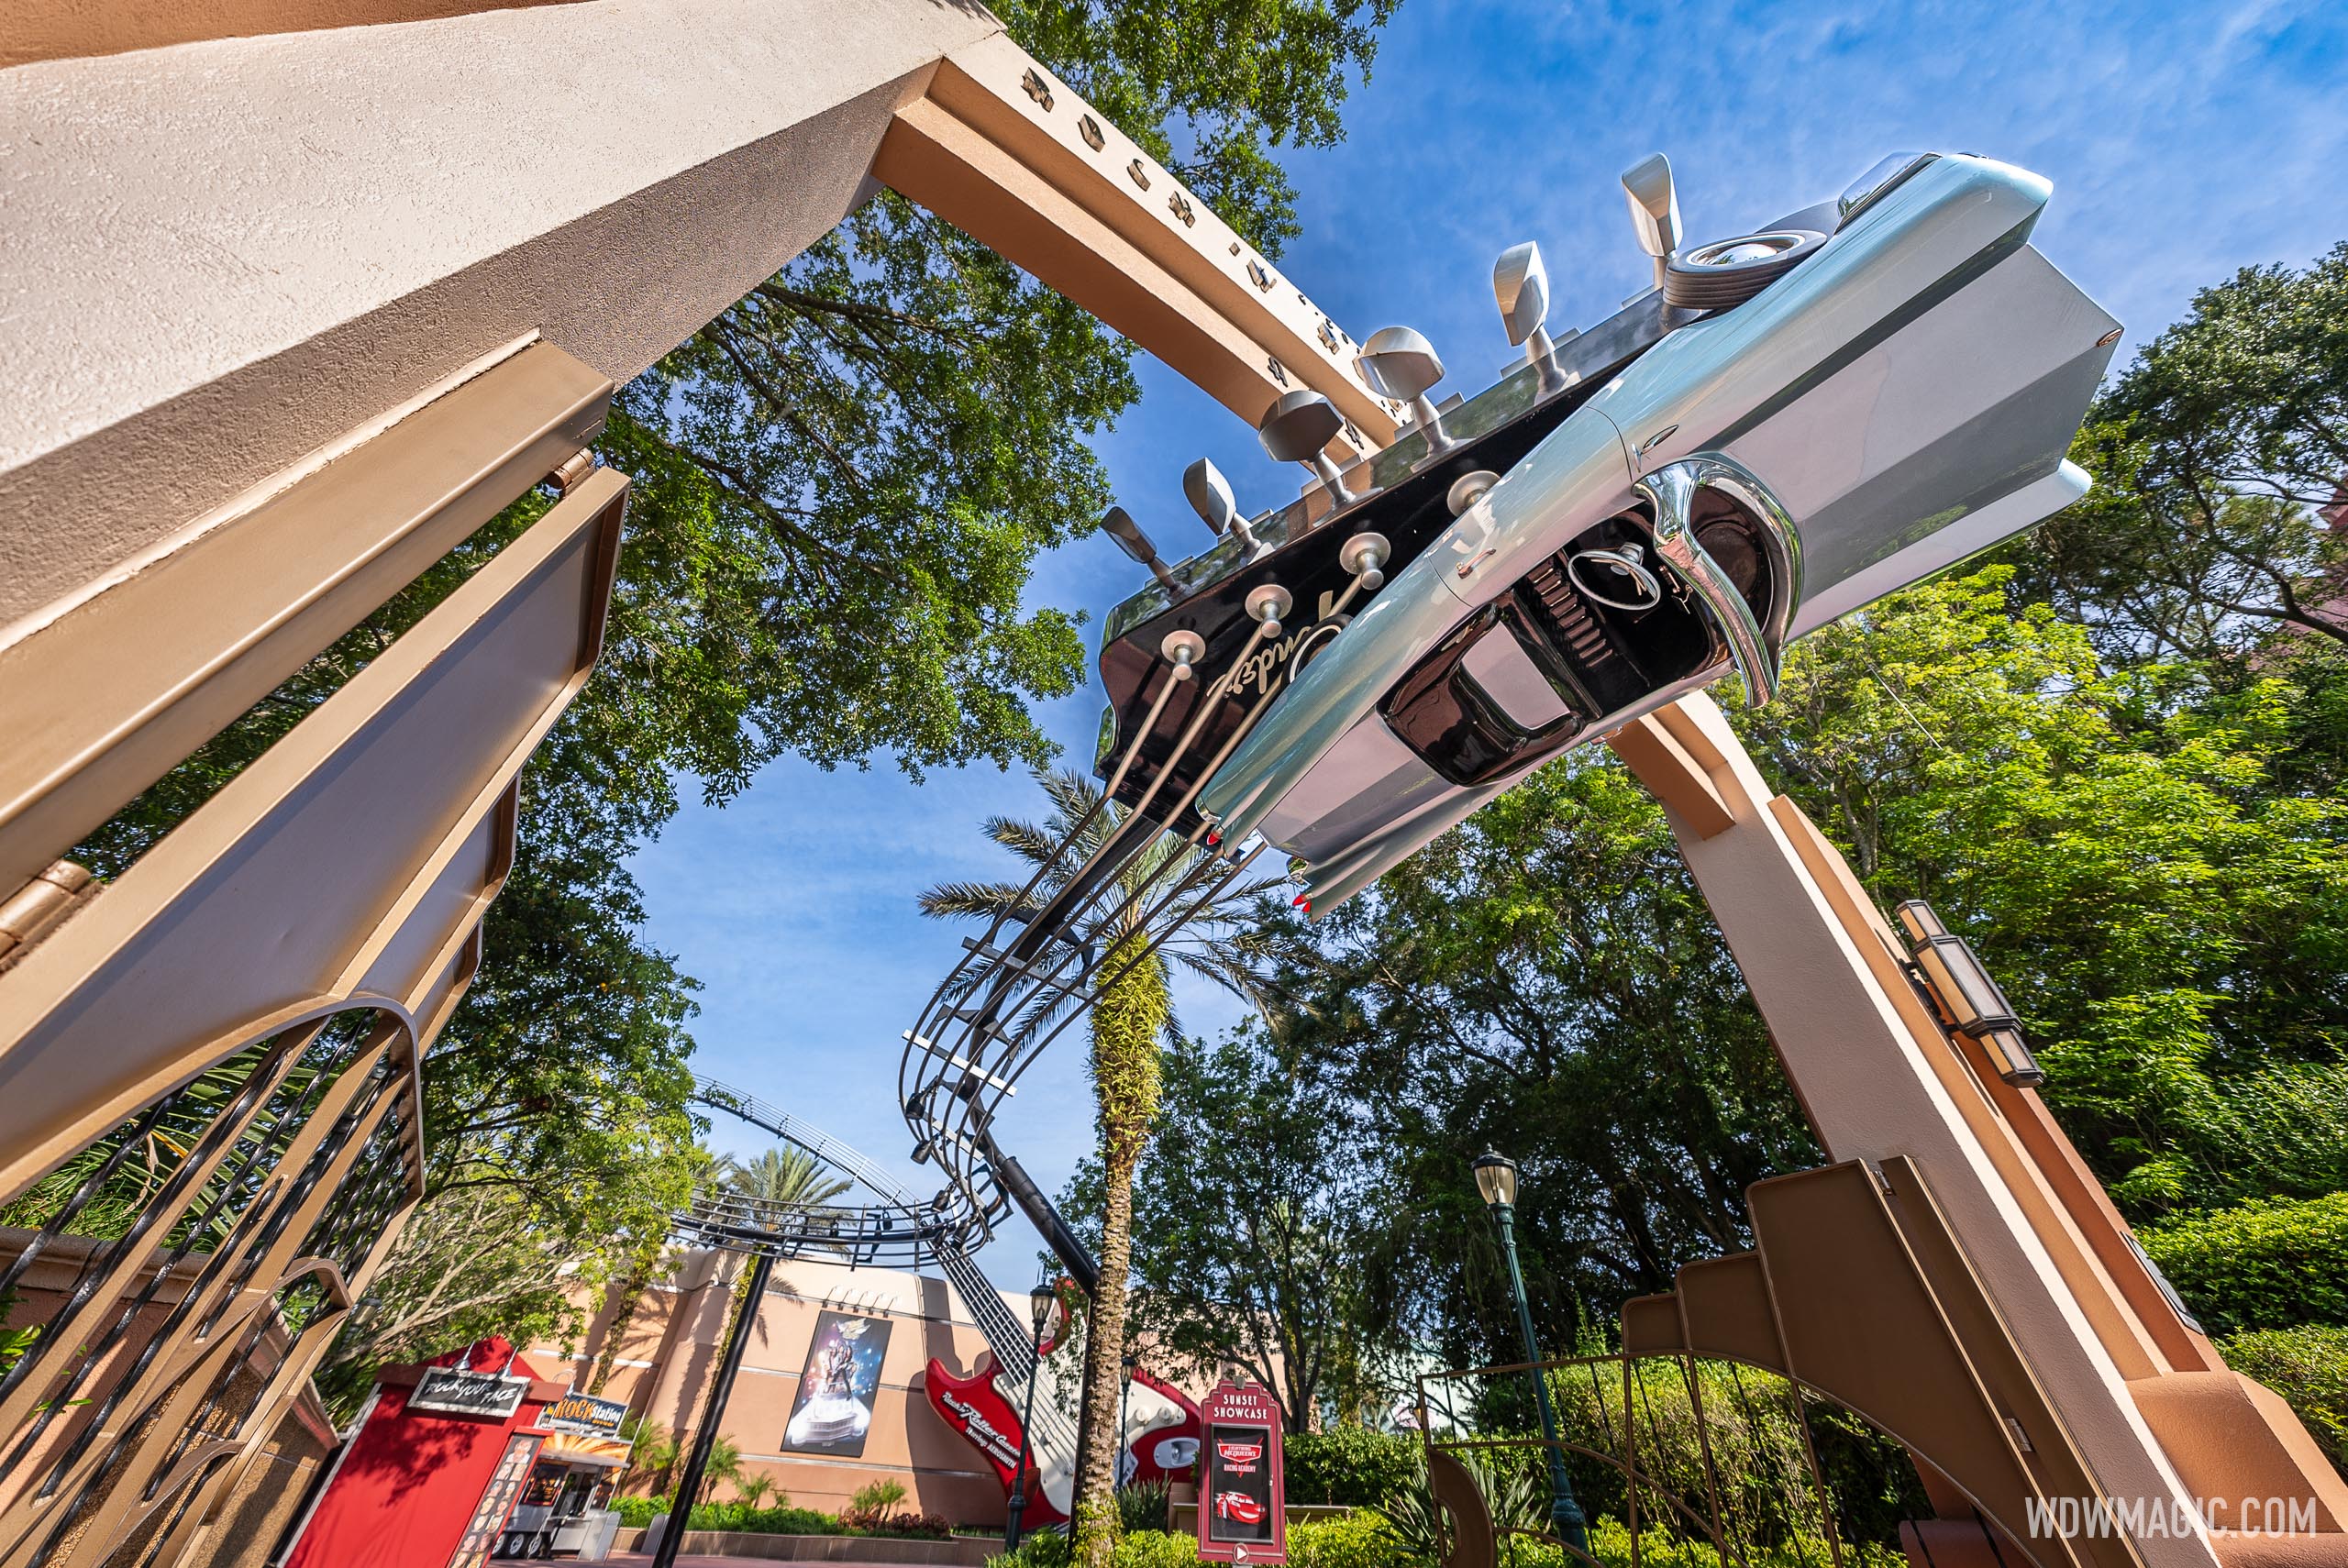 Walt Disney World's Rock 'n' Roller Coaster now closed for long  refurbishment